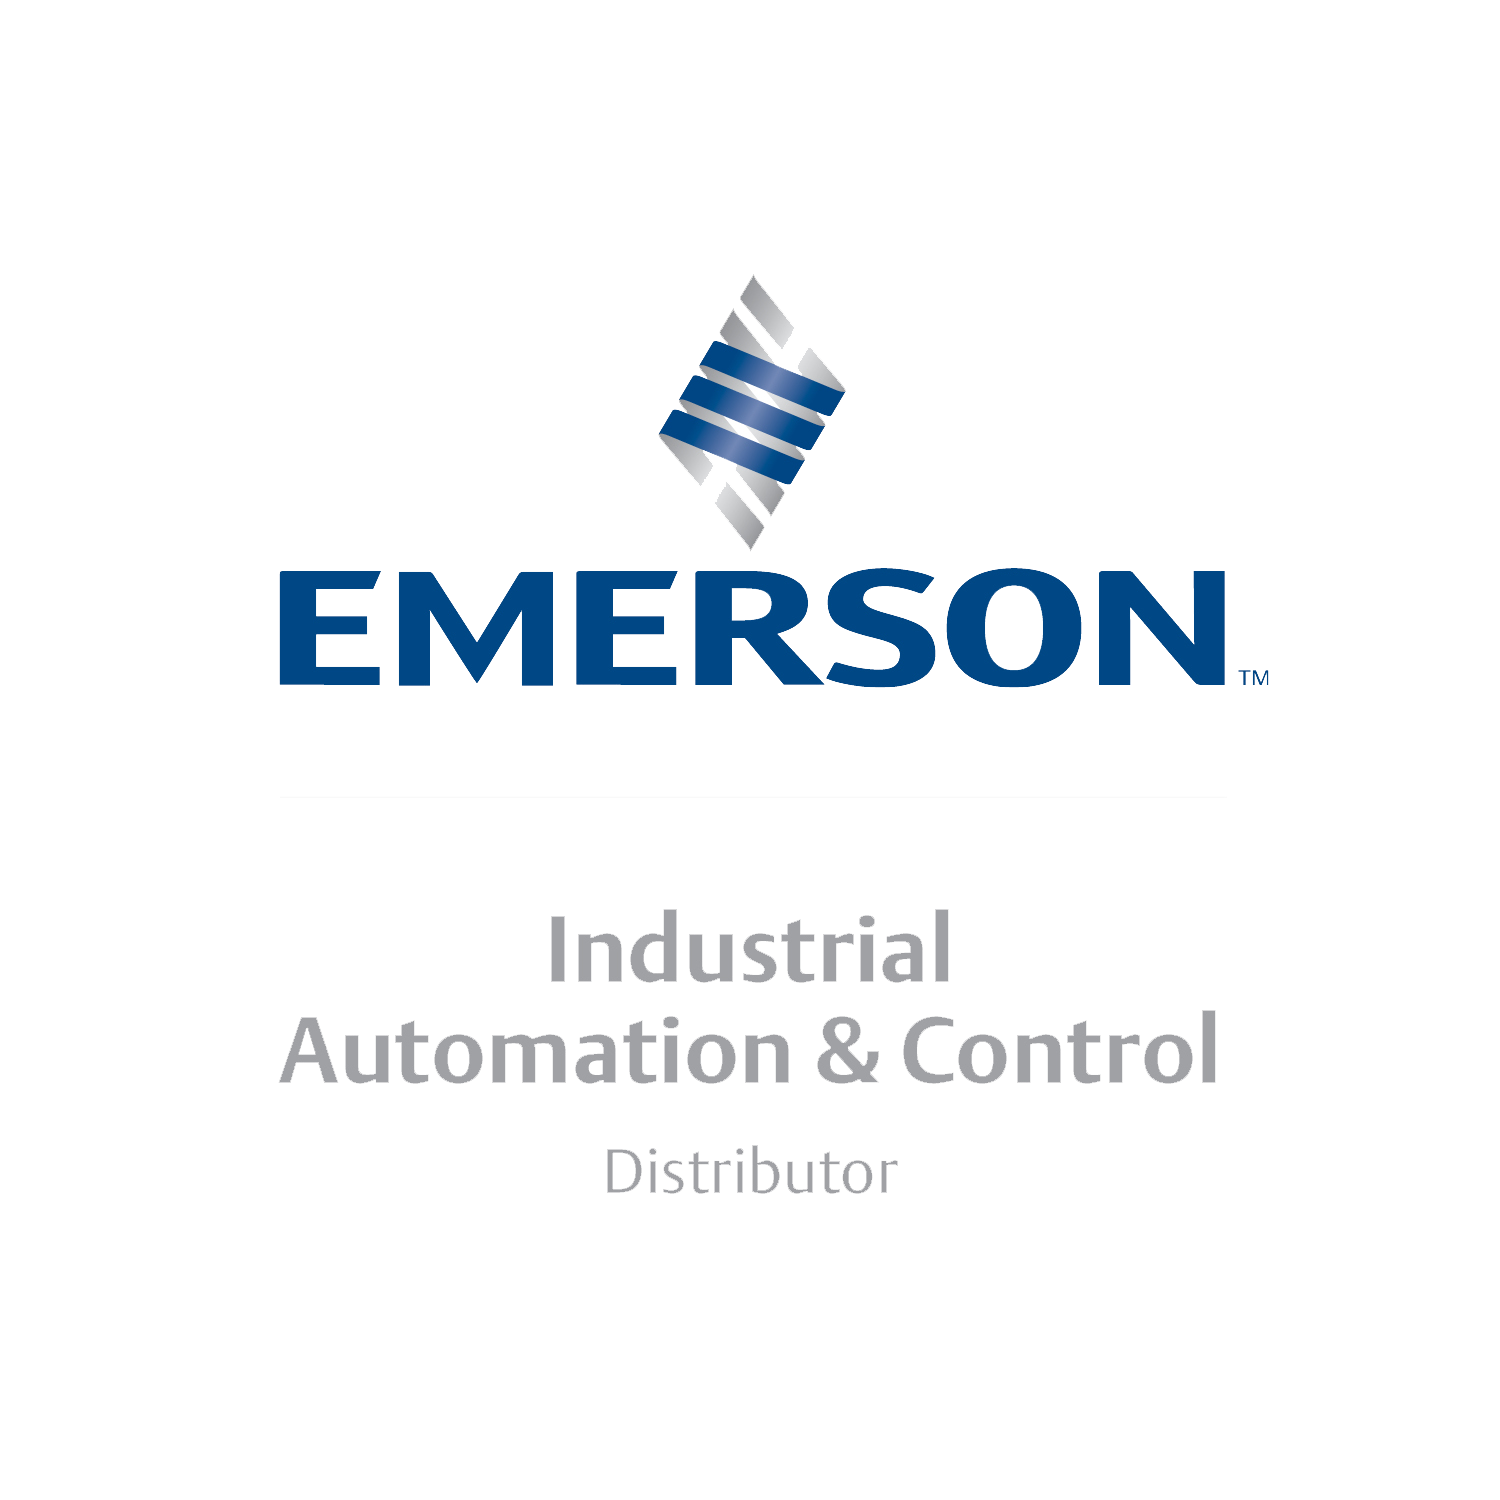 Emerson Logo